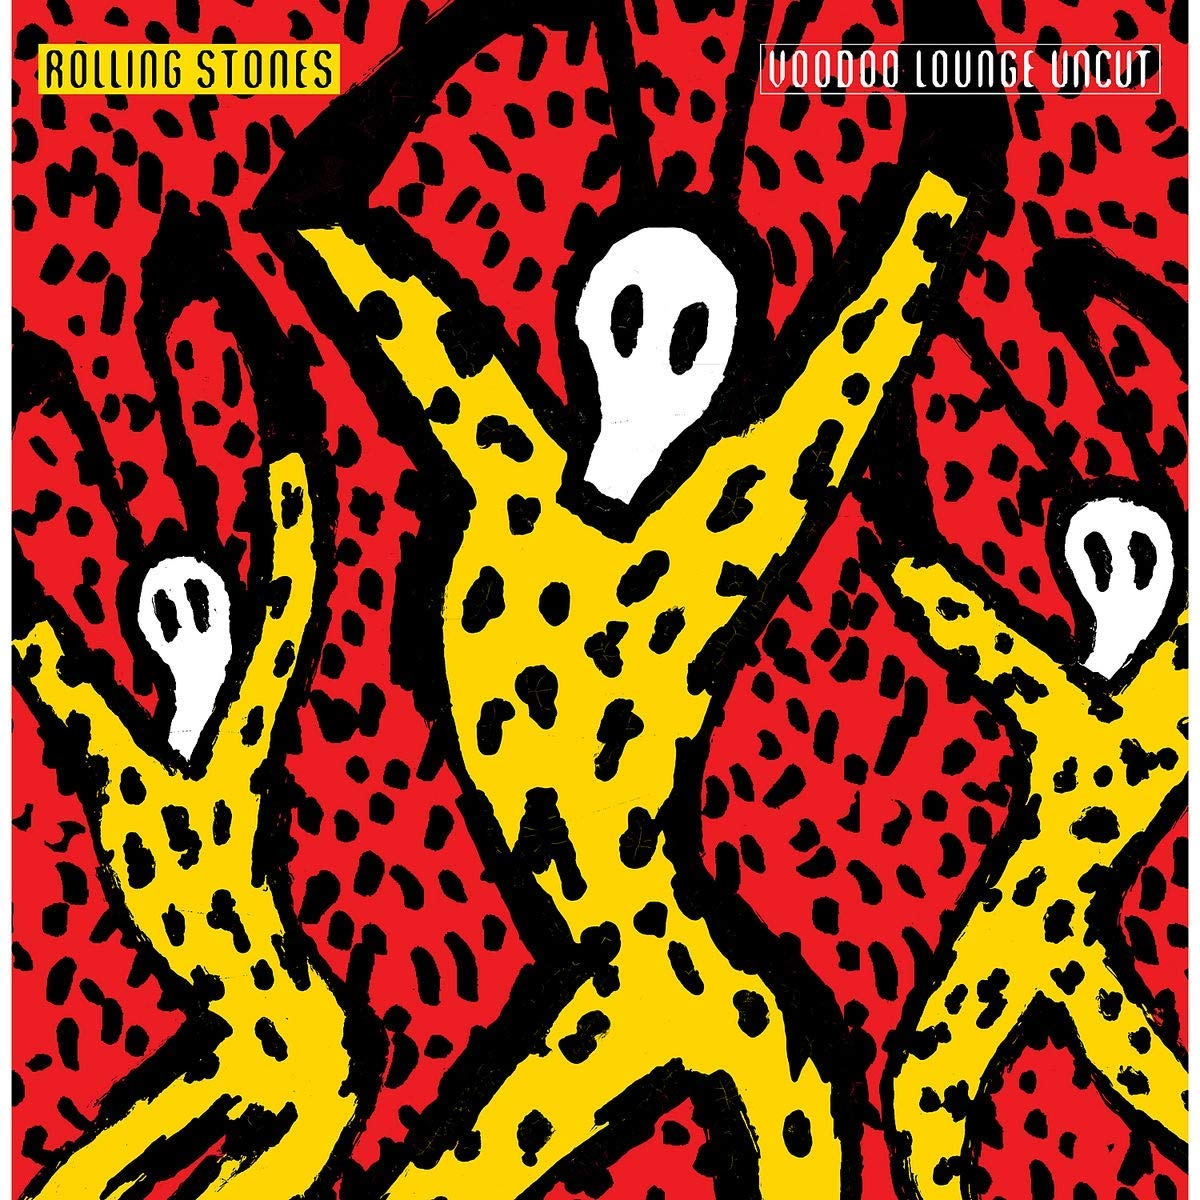 Rolling Stones - Voodoo Lounge Uncut - 2CD/DVD